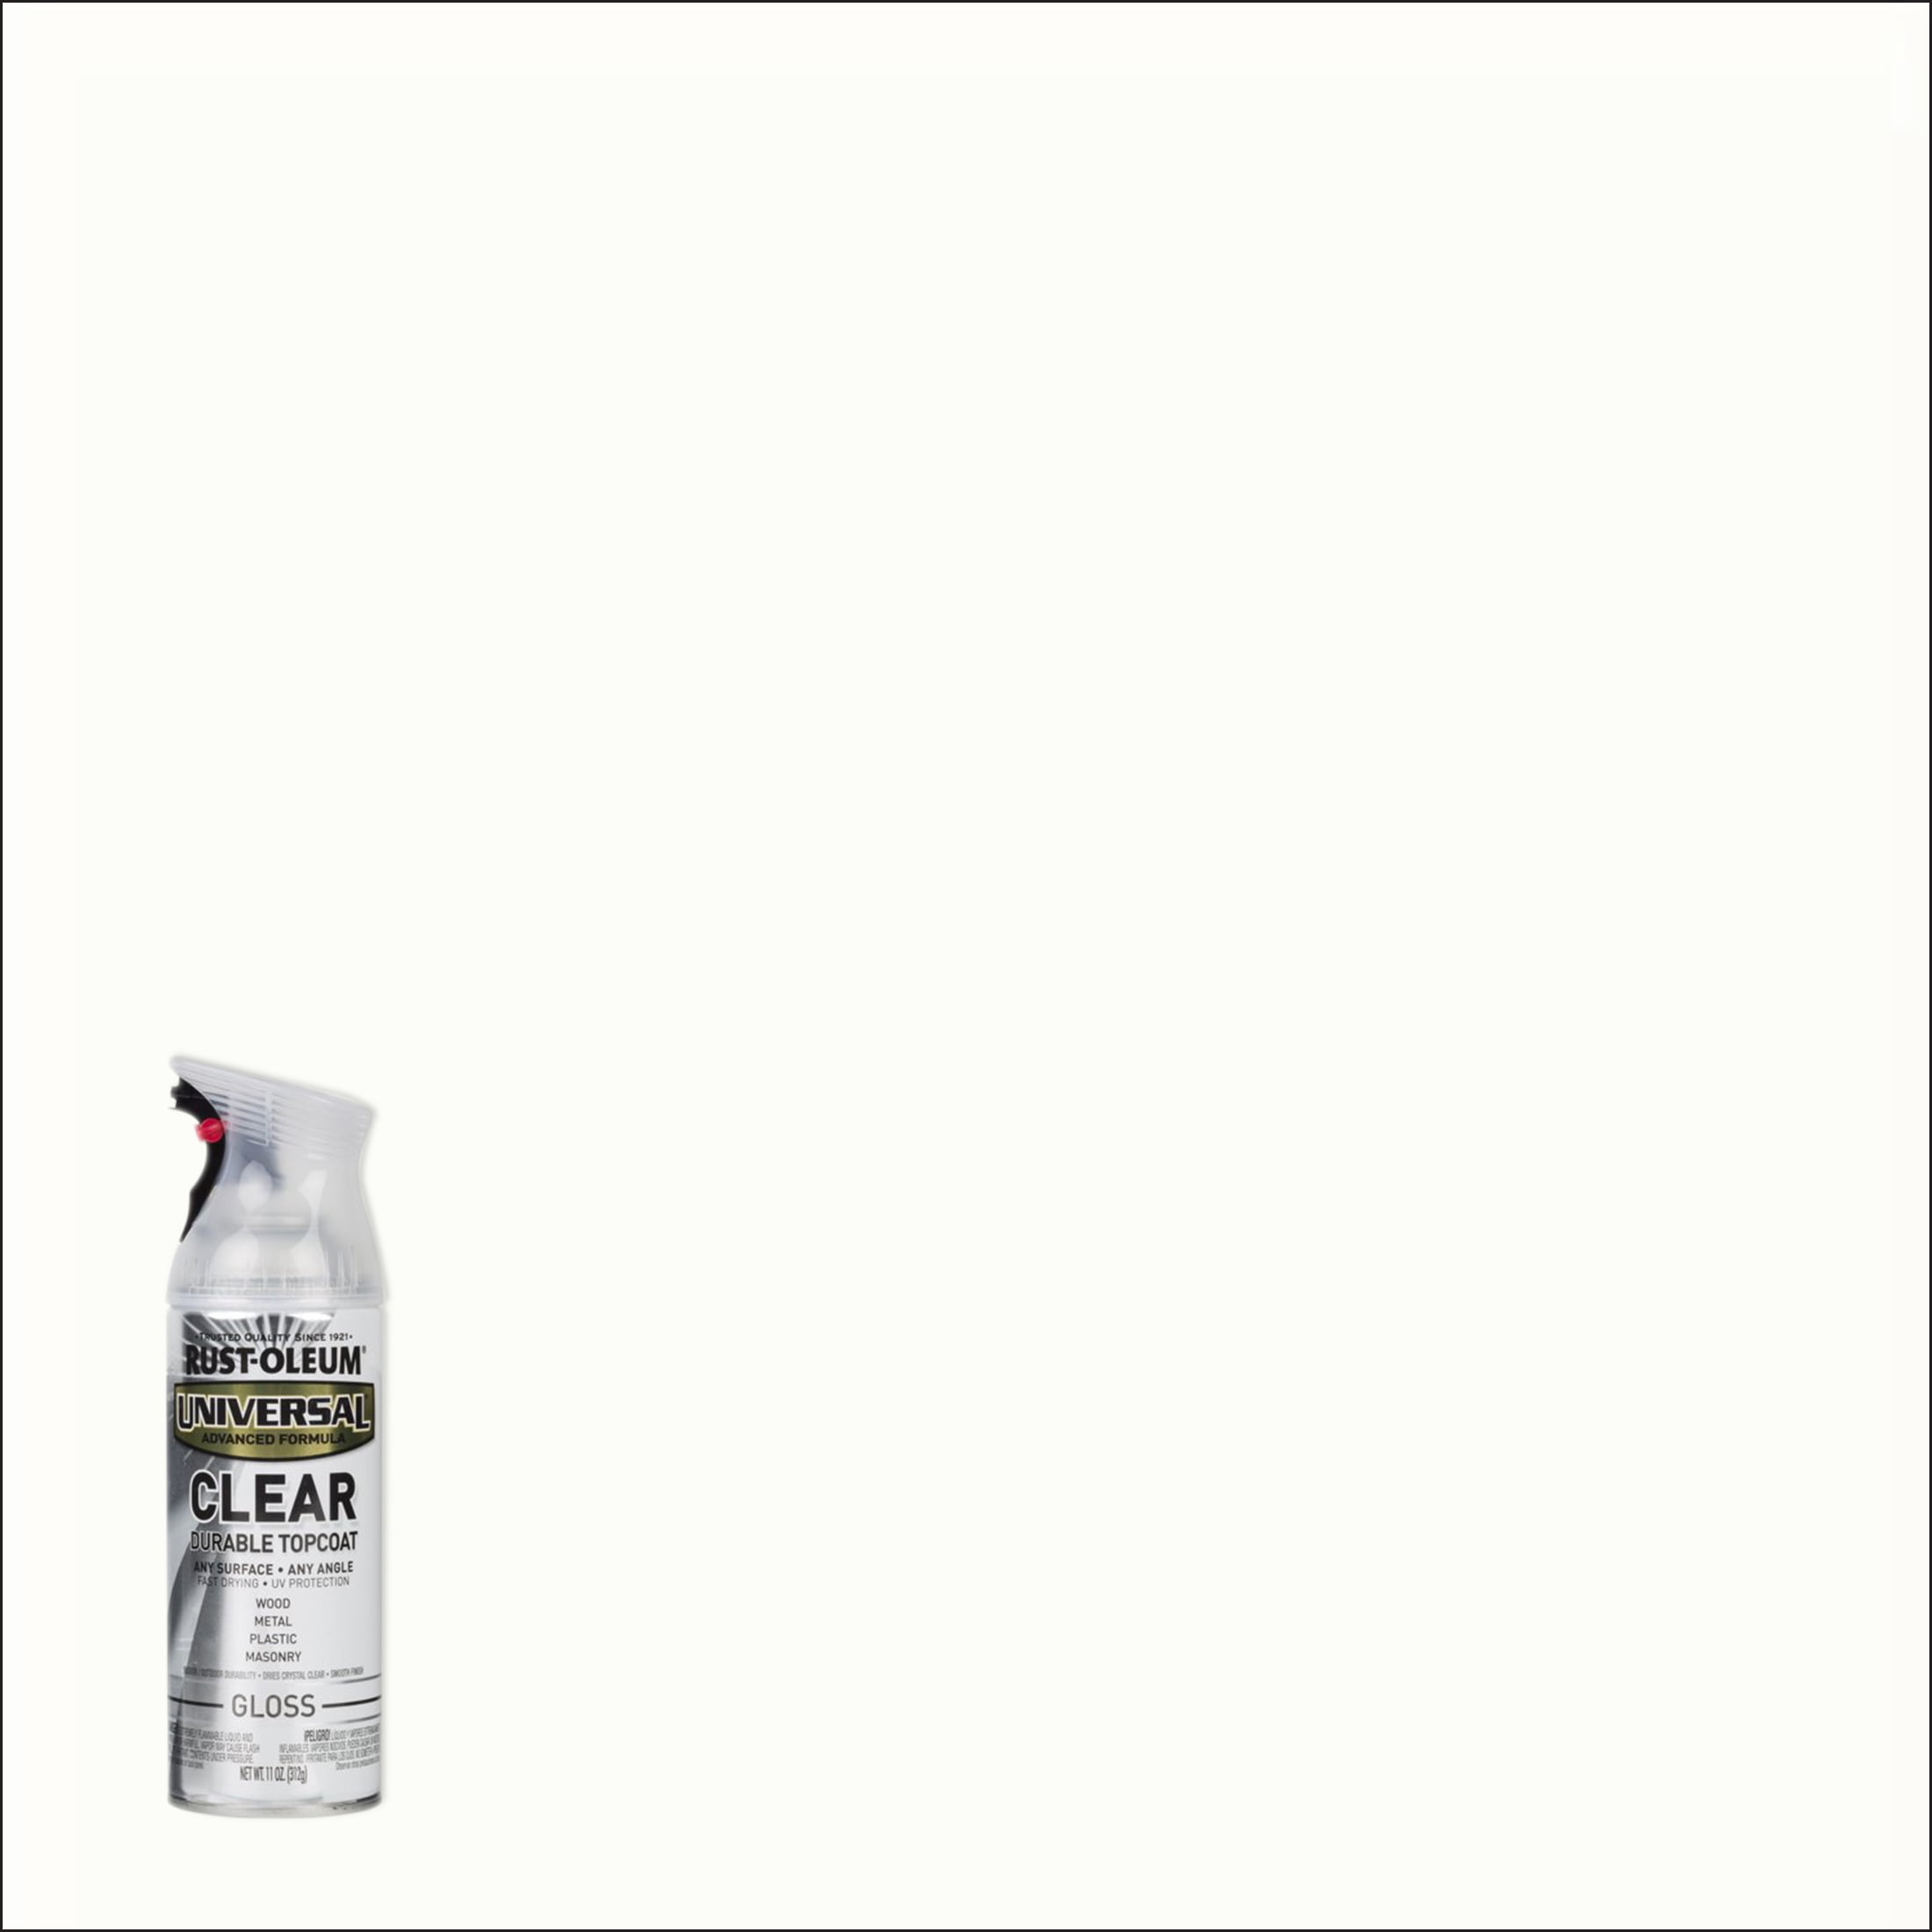 Clear Rust Oleum Universal All Surface Interiorexterior Gloss Spray